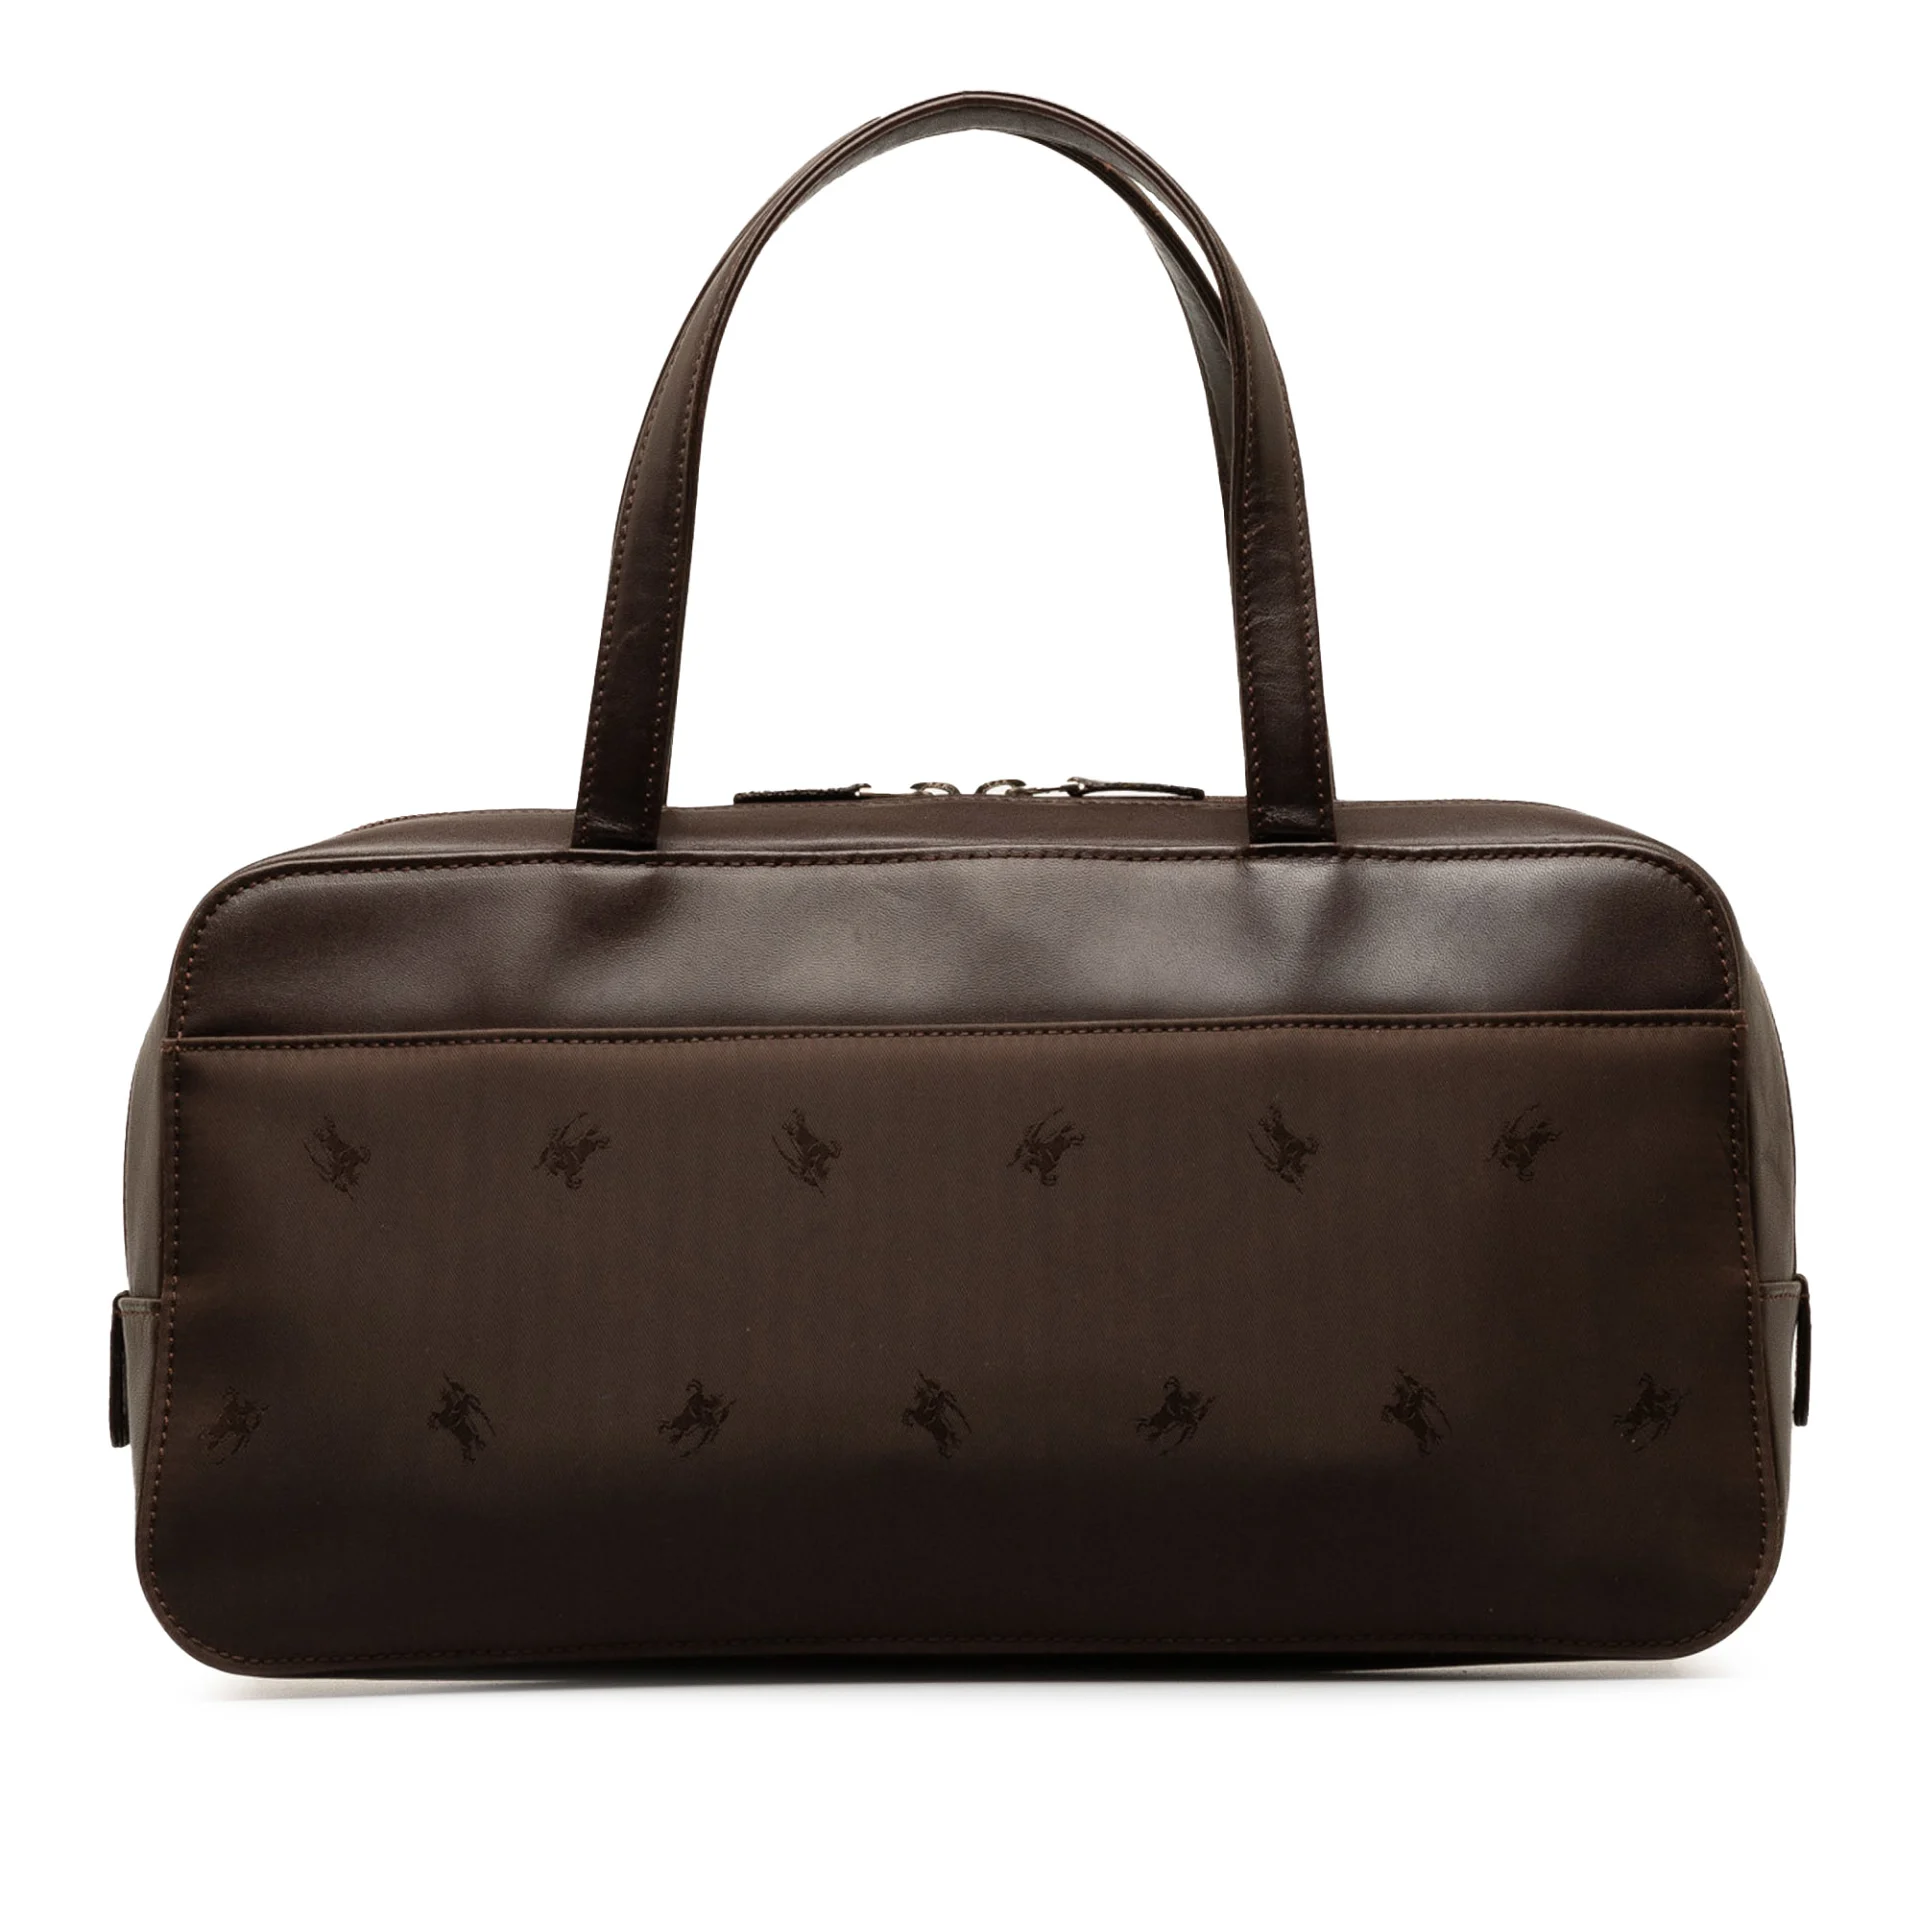 Burberry Nylon Handbag